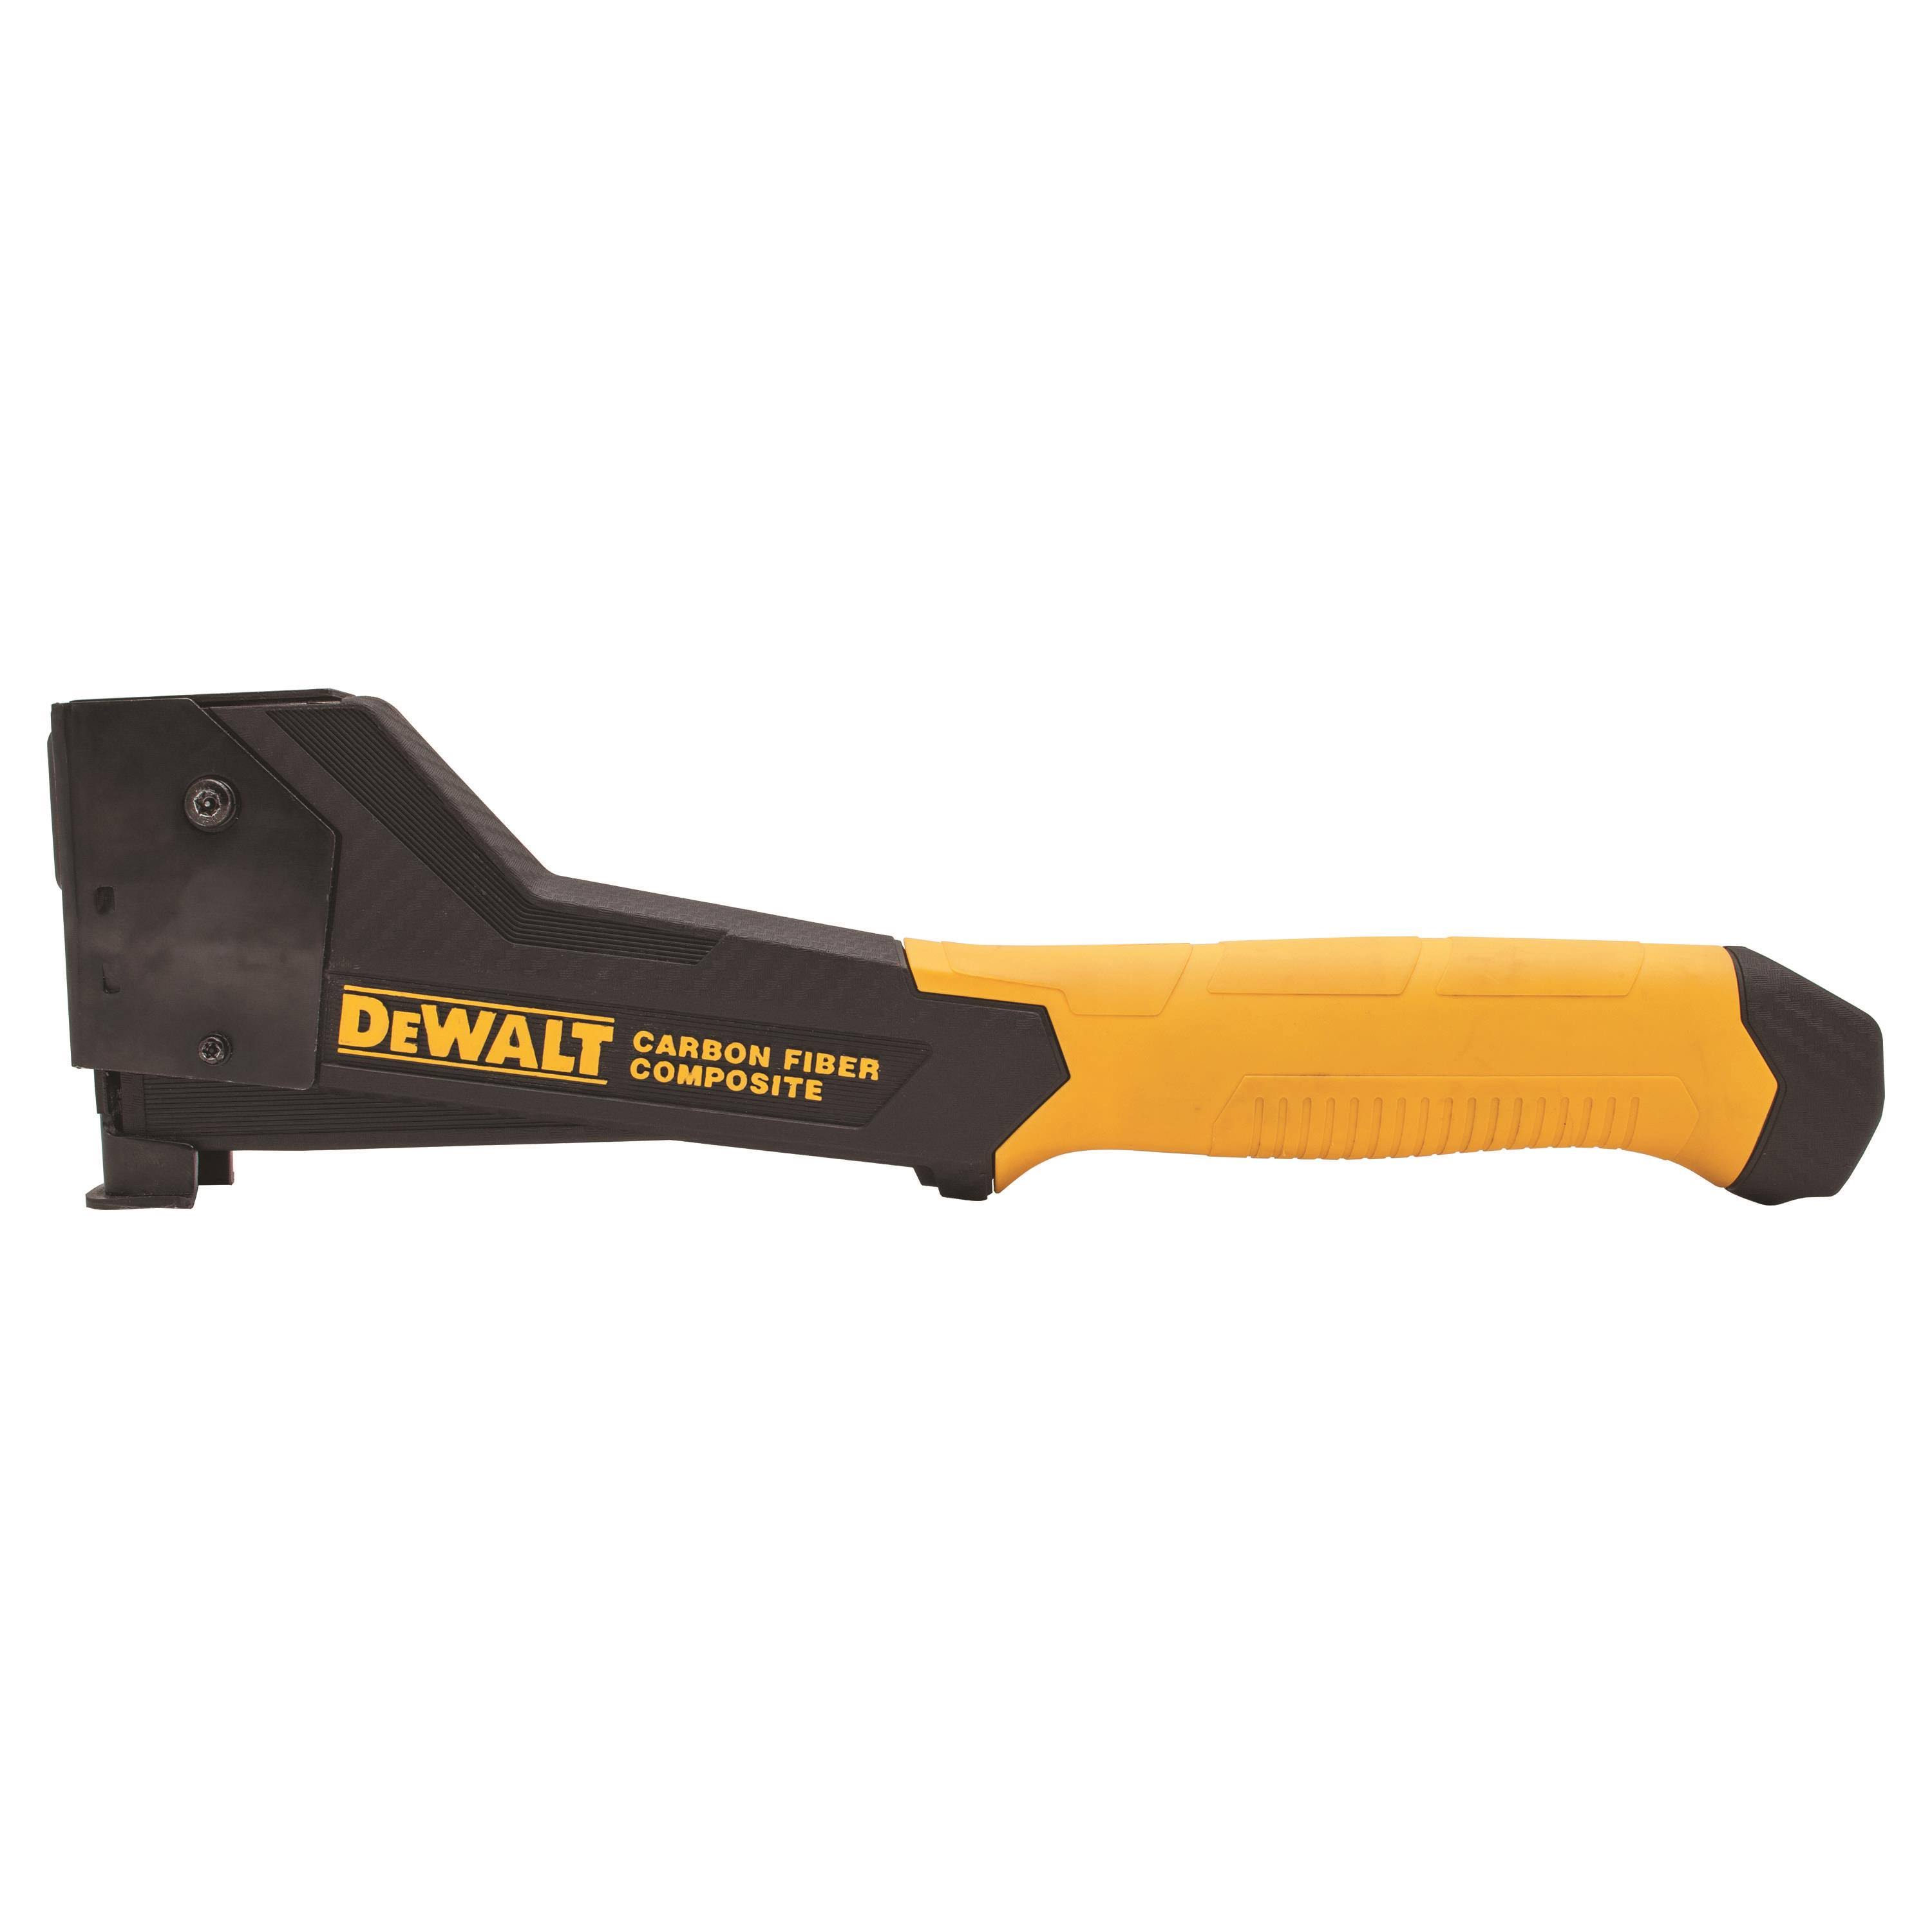 Dewalt DWHT75900 Carbon Fiber Composite Hammer Tacker - Black and Yellow